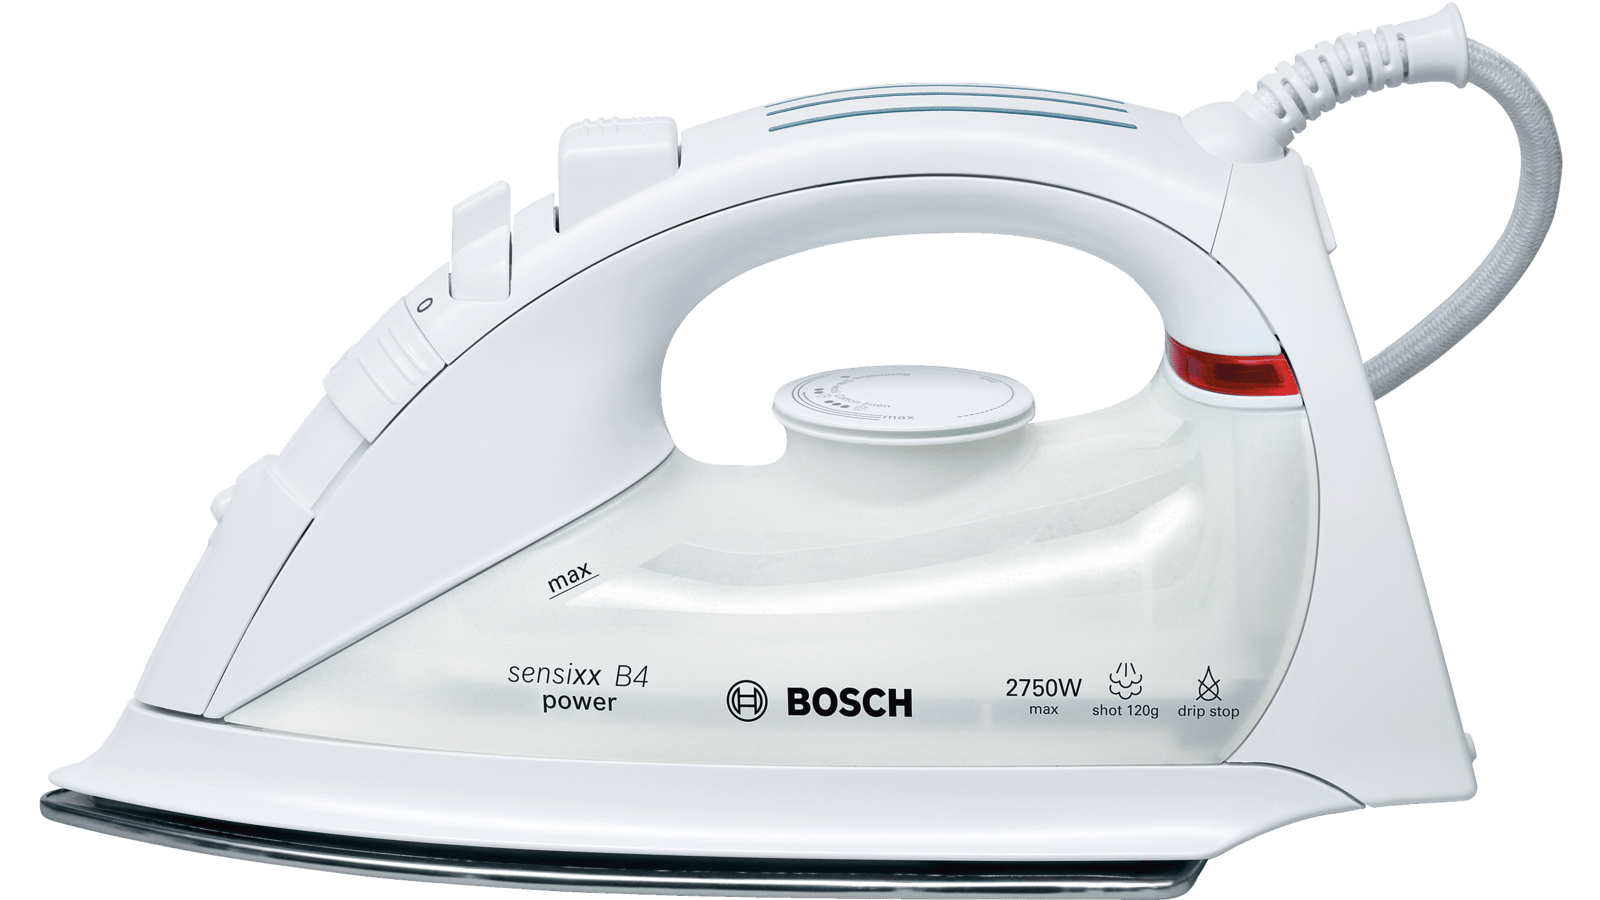 Plancha de vapor sensixx B4 power | Bosch Electrodomésticos